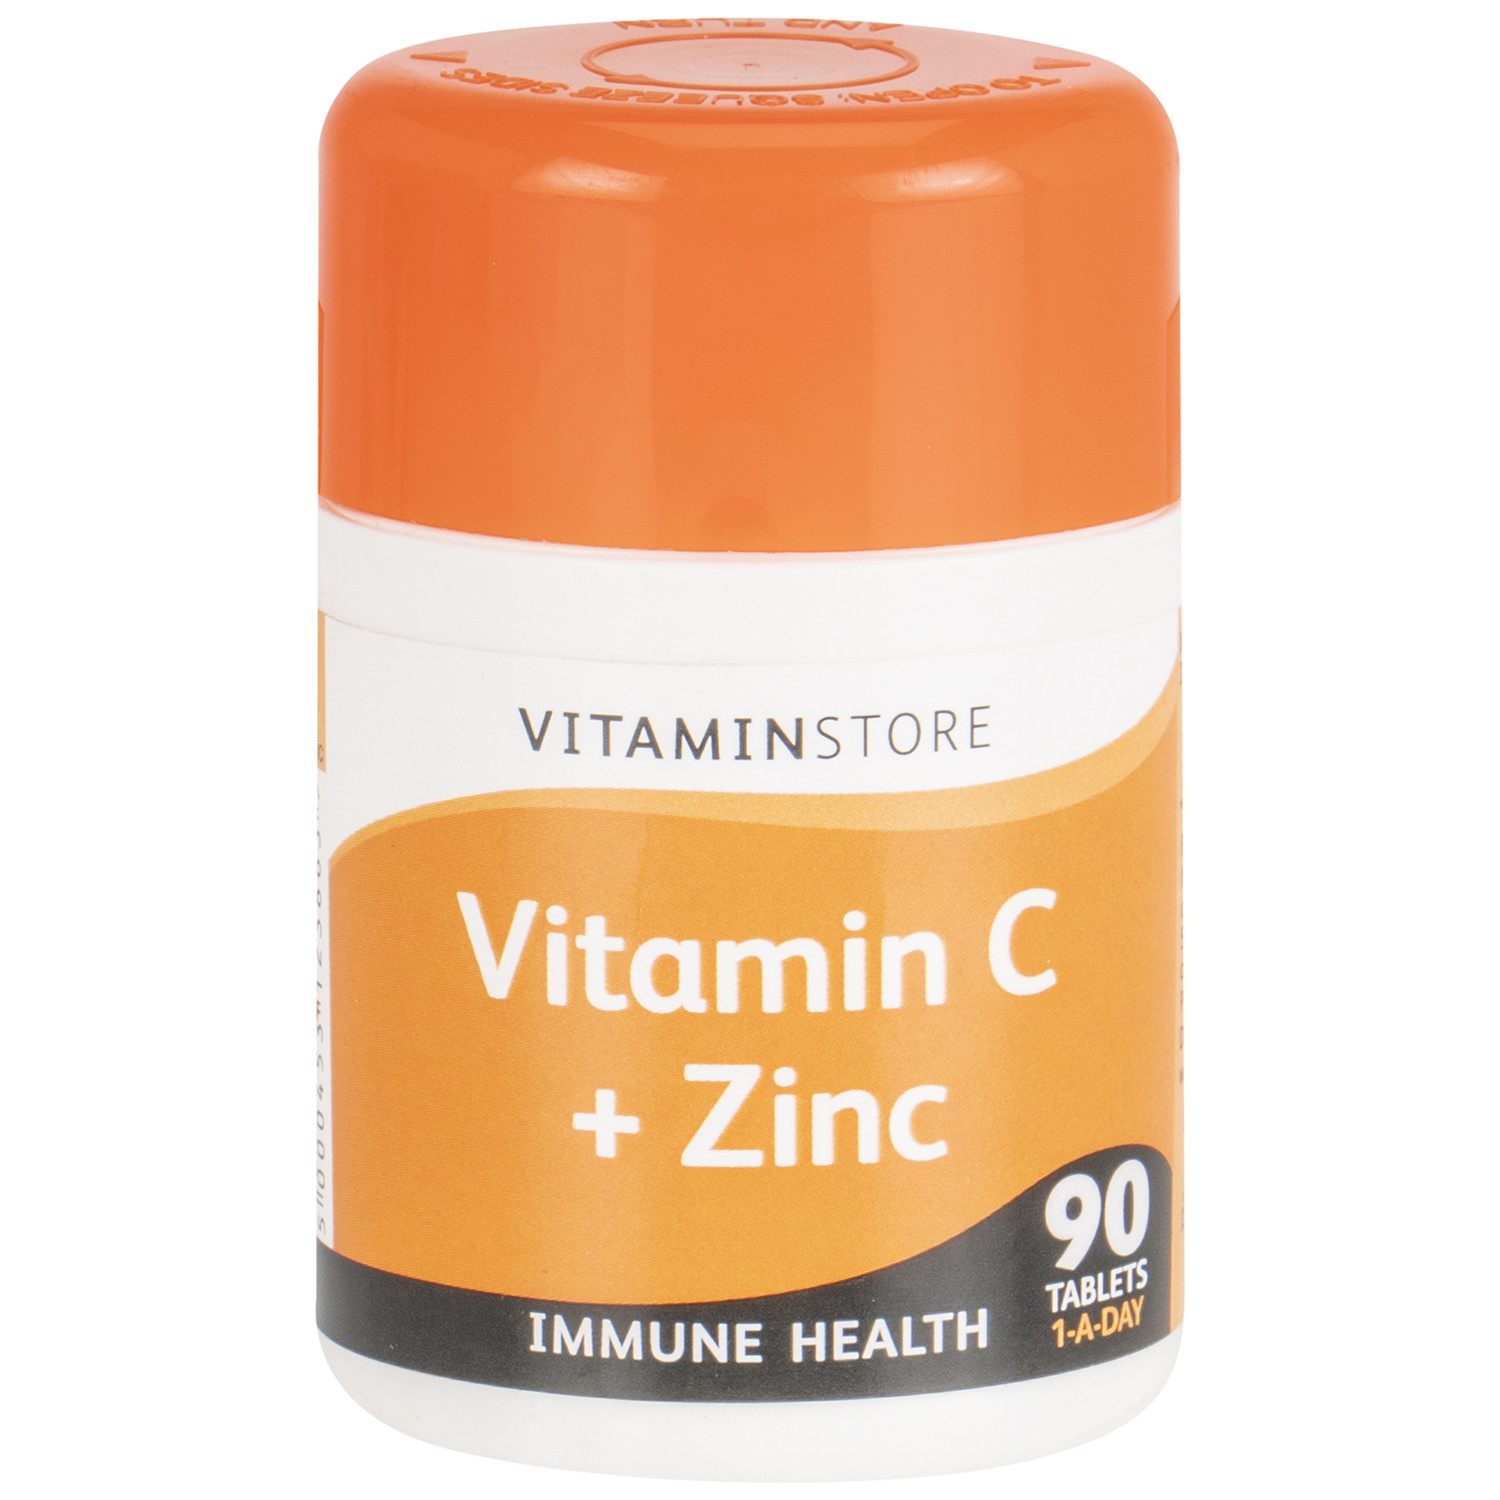 Vitamin C and Zinc Tablets Image